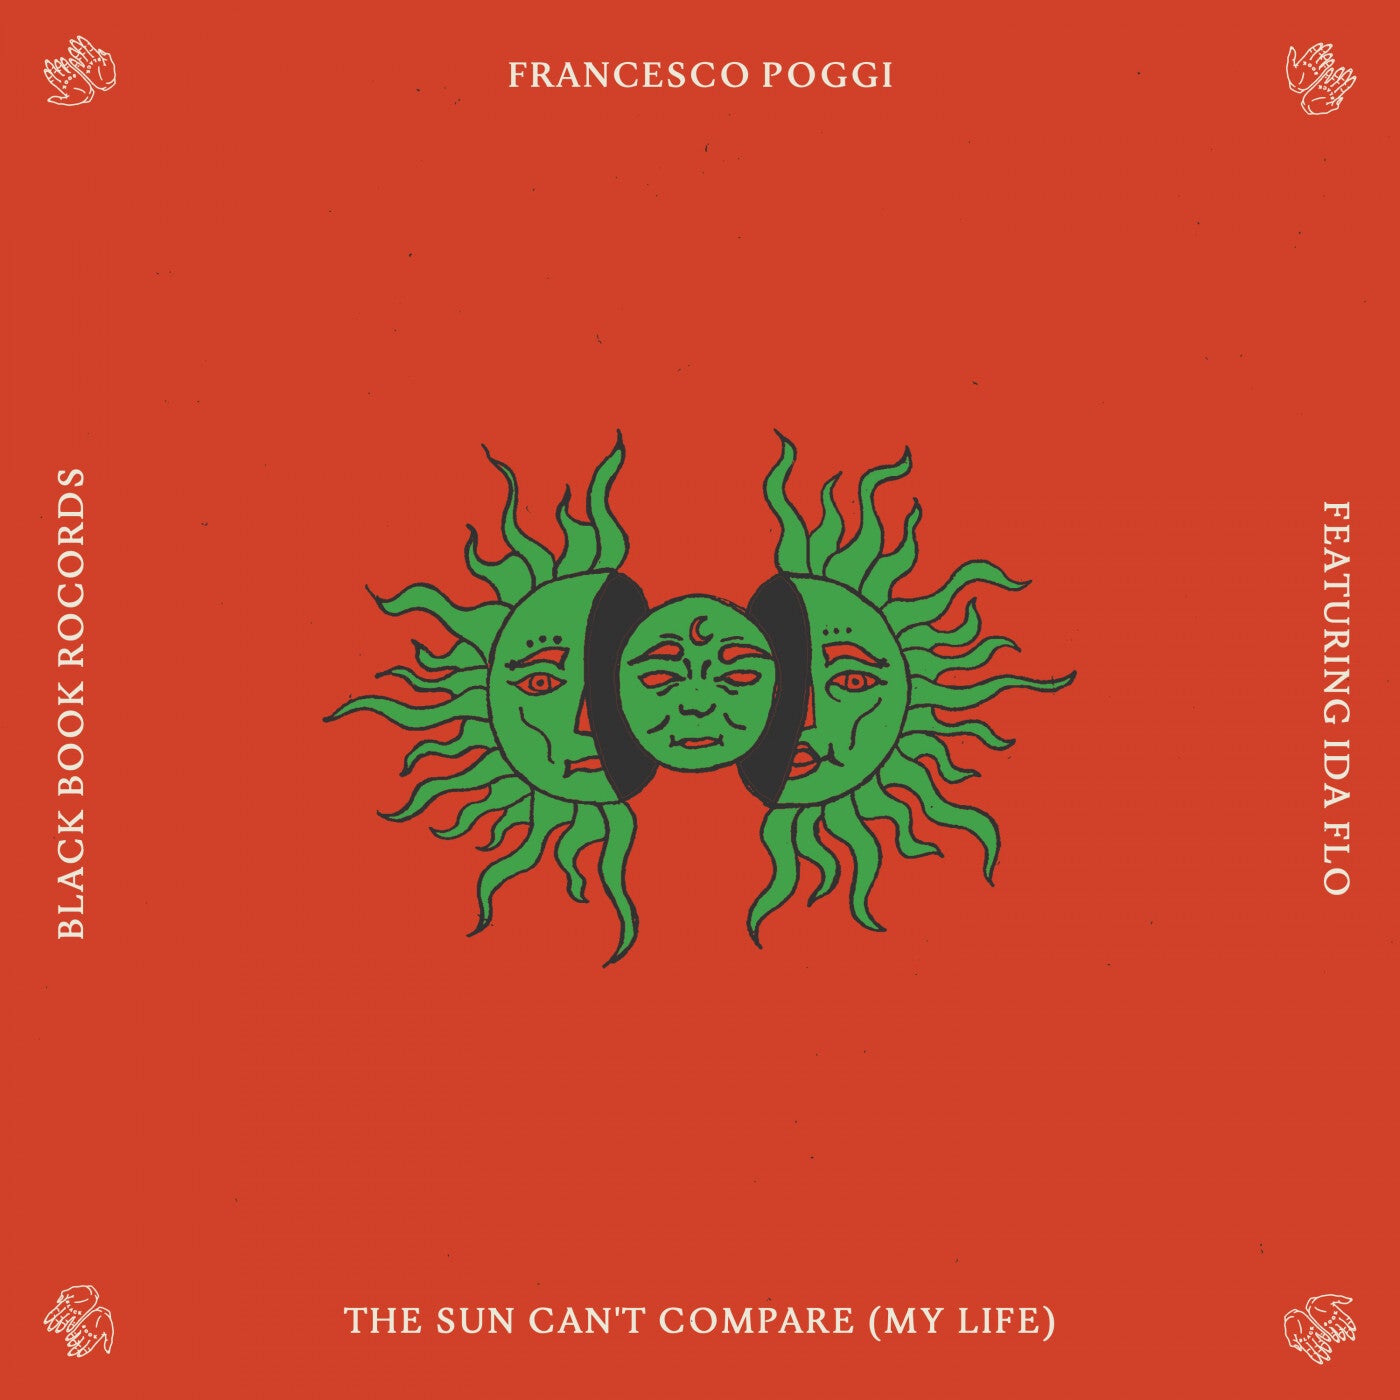 Download Francesco Poggi - The Sun Can't Compare (My Life) feat. IDA fLO on Electrobuzz